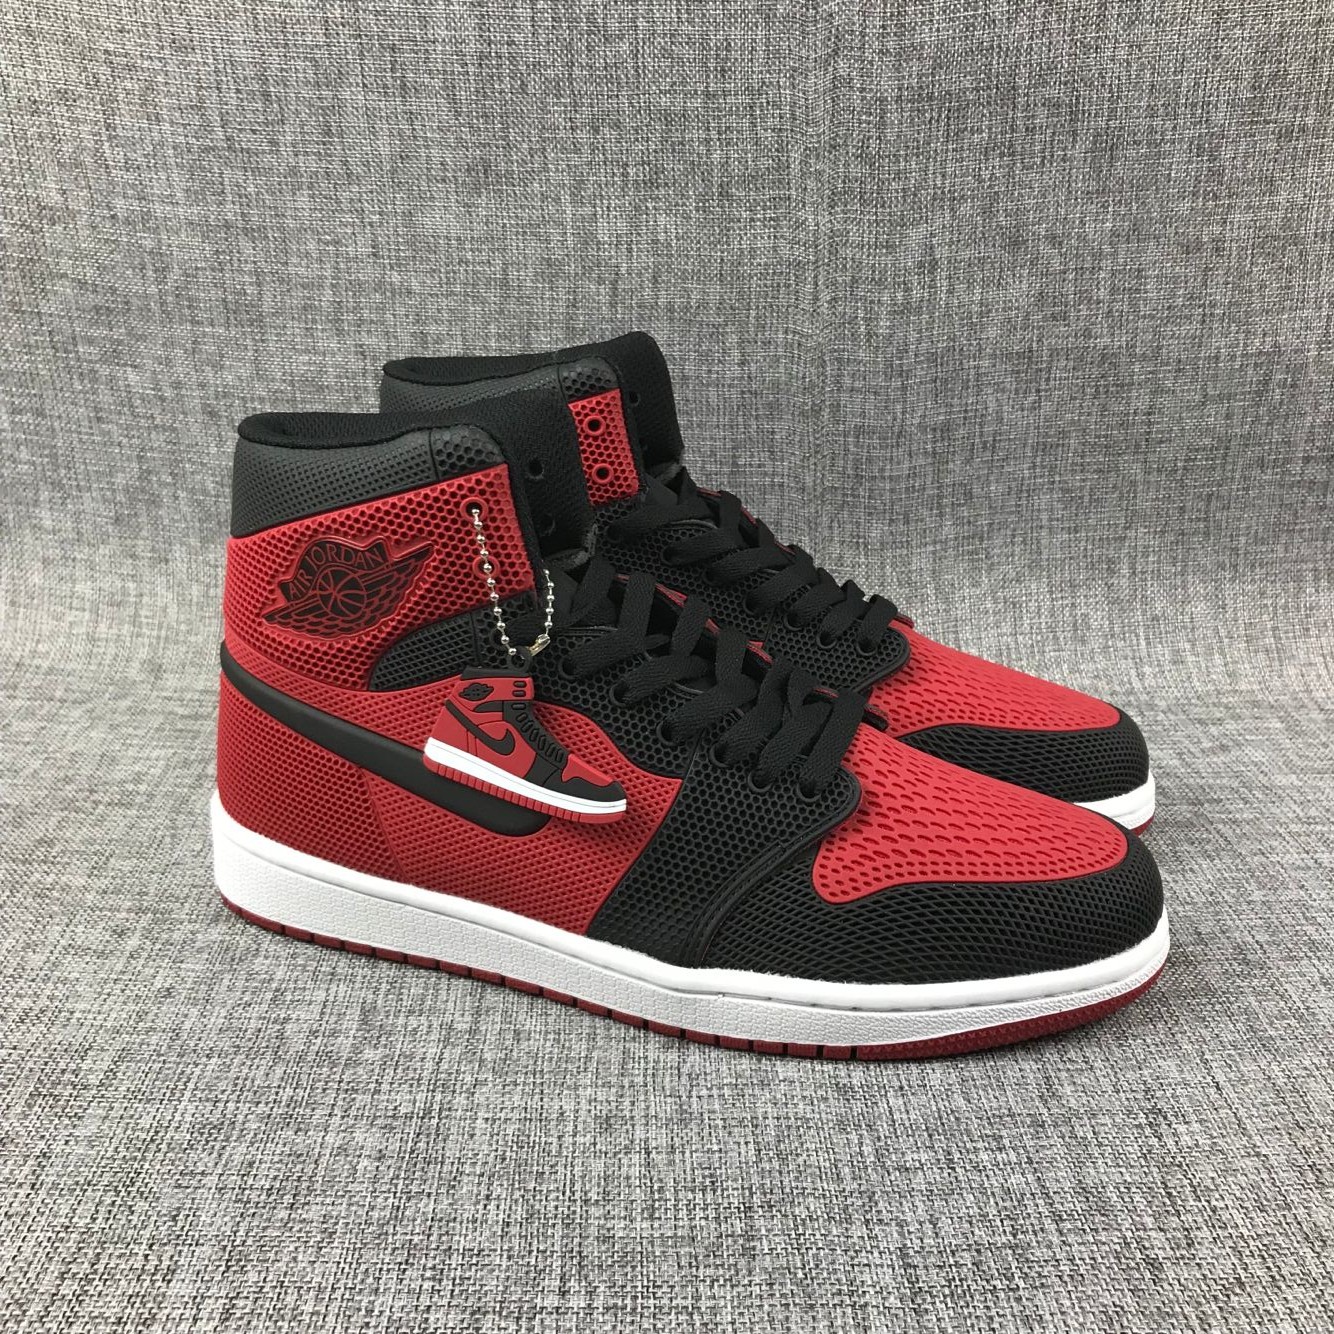 New Air Jordan 1 Drop Plastic Black Red Shoes